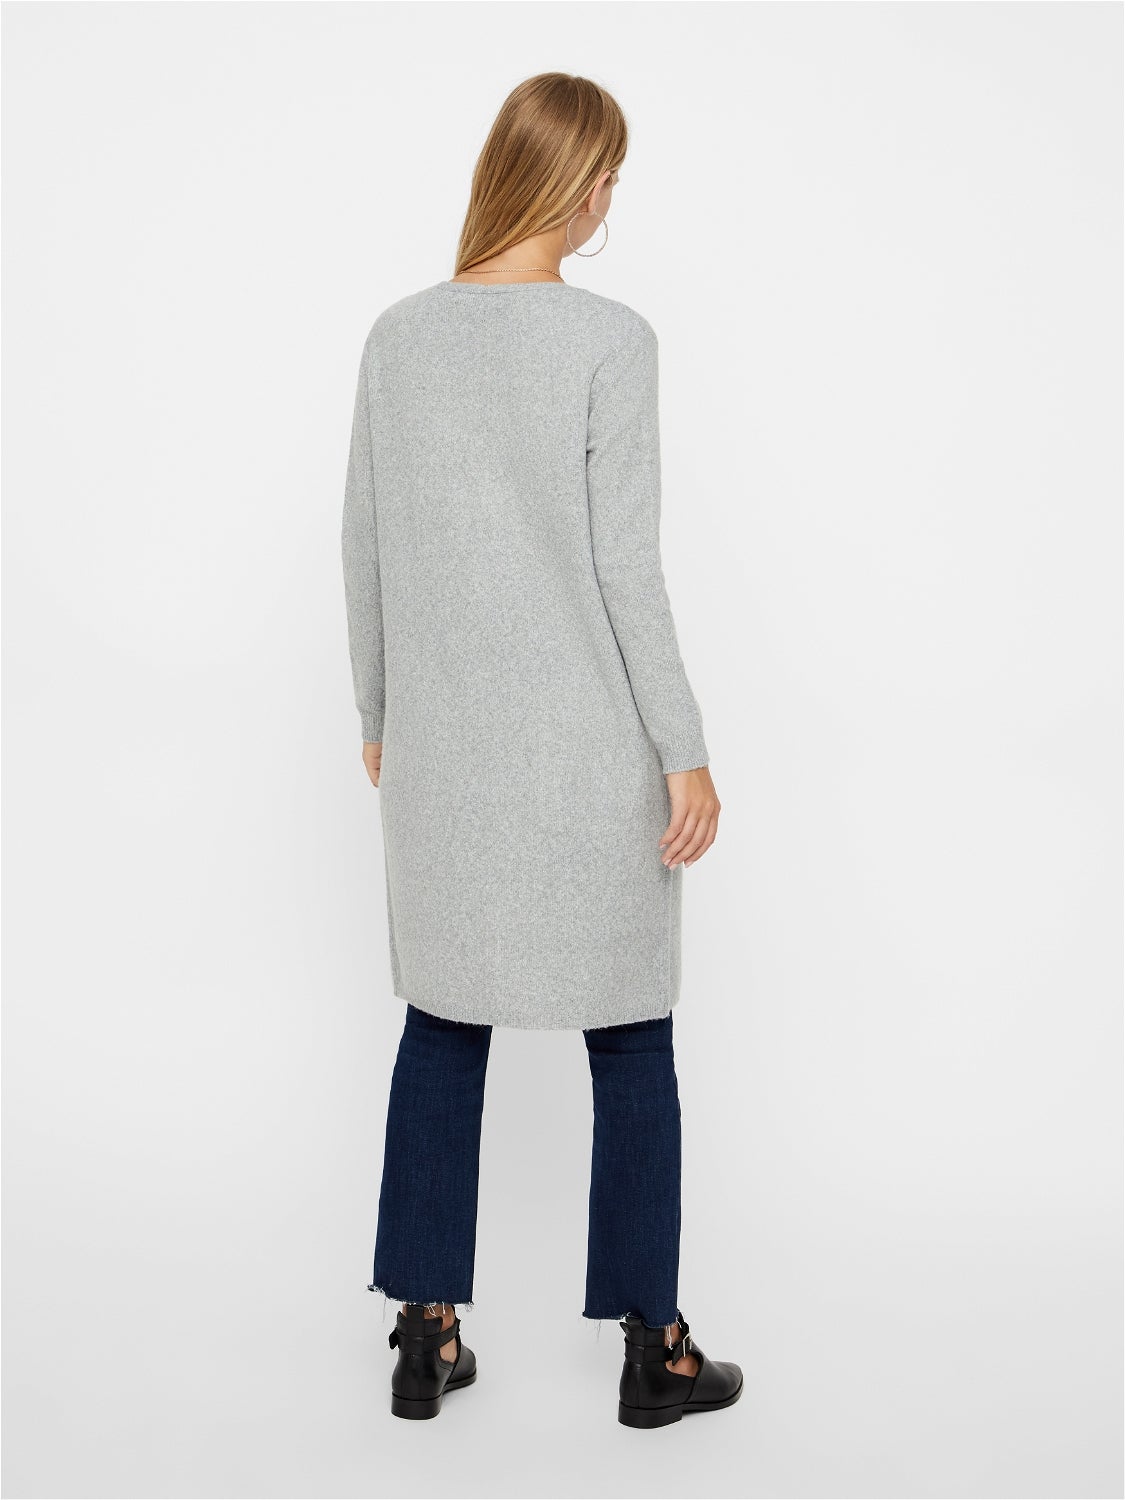 VMDOFFY Knit Vero Cardigan | Moda® | Light Grey